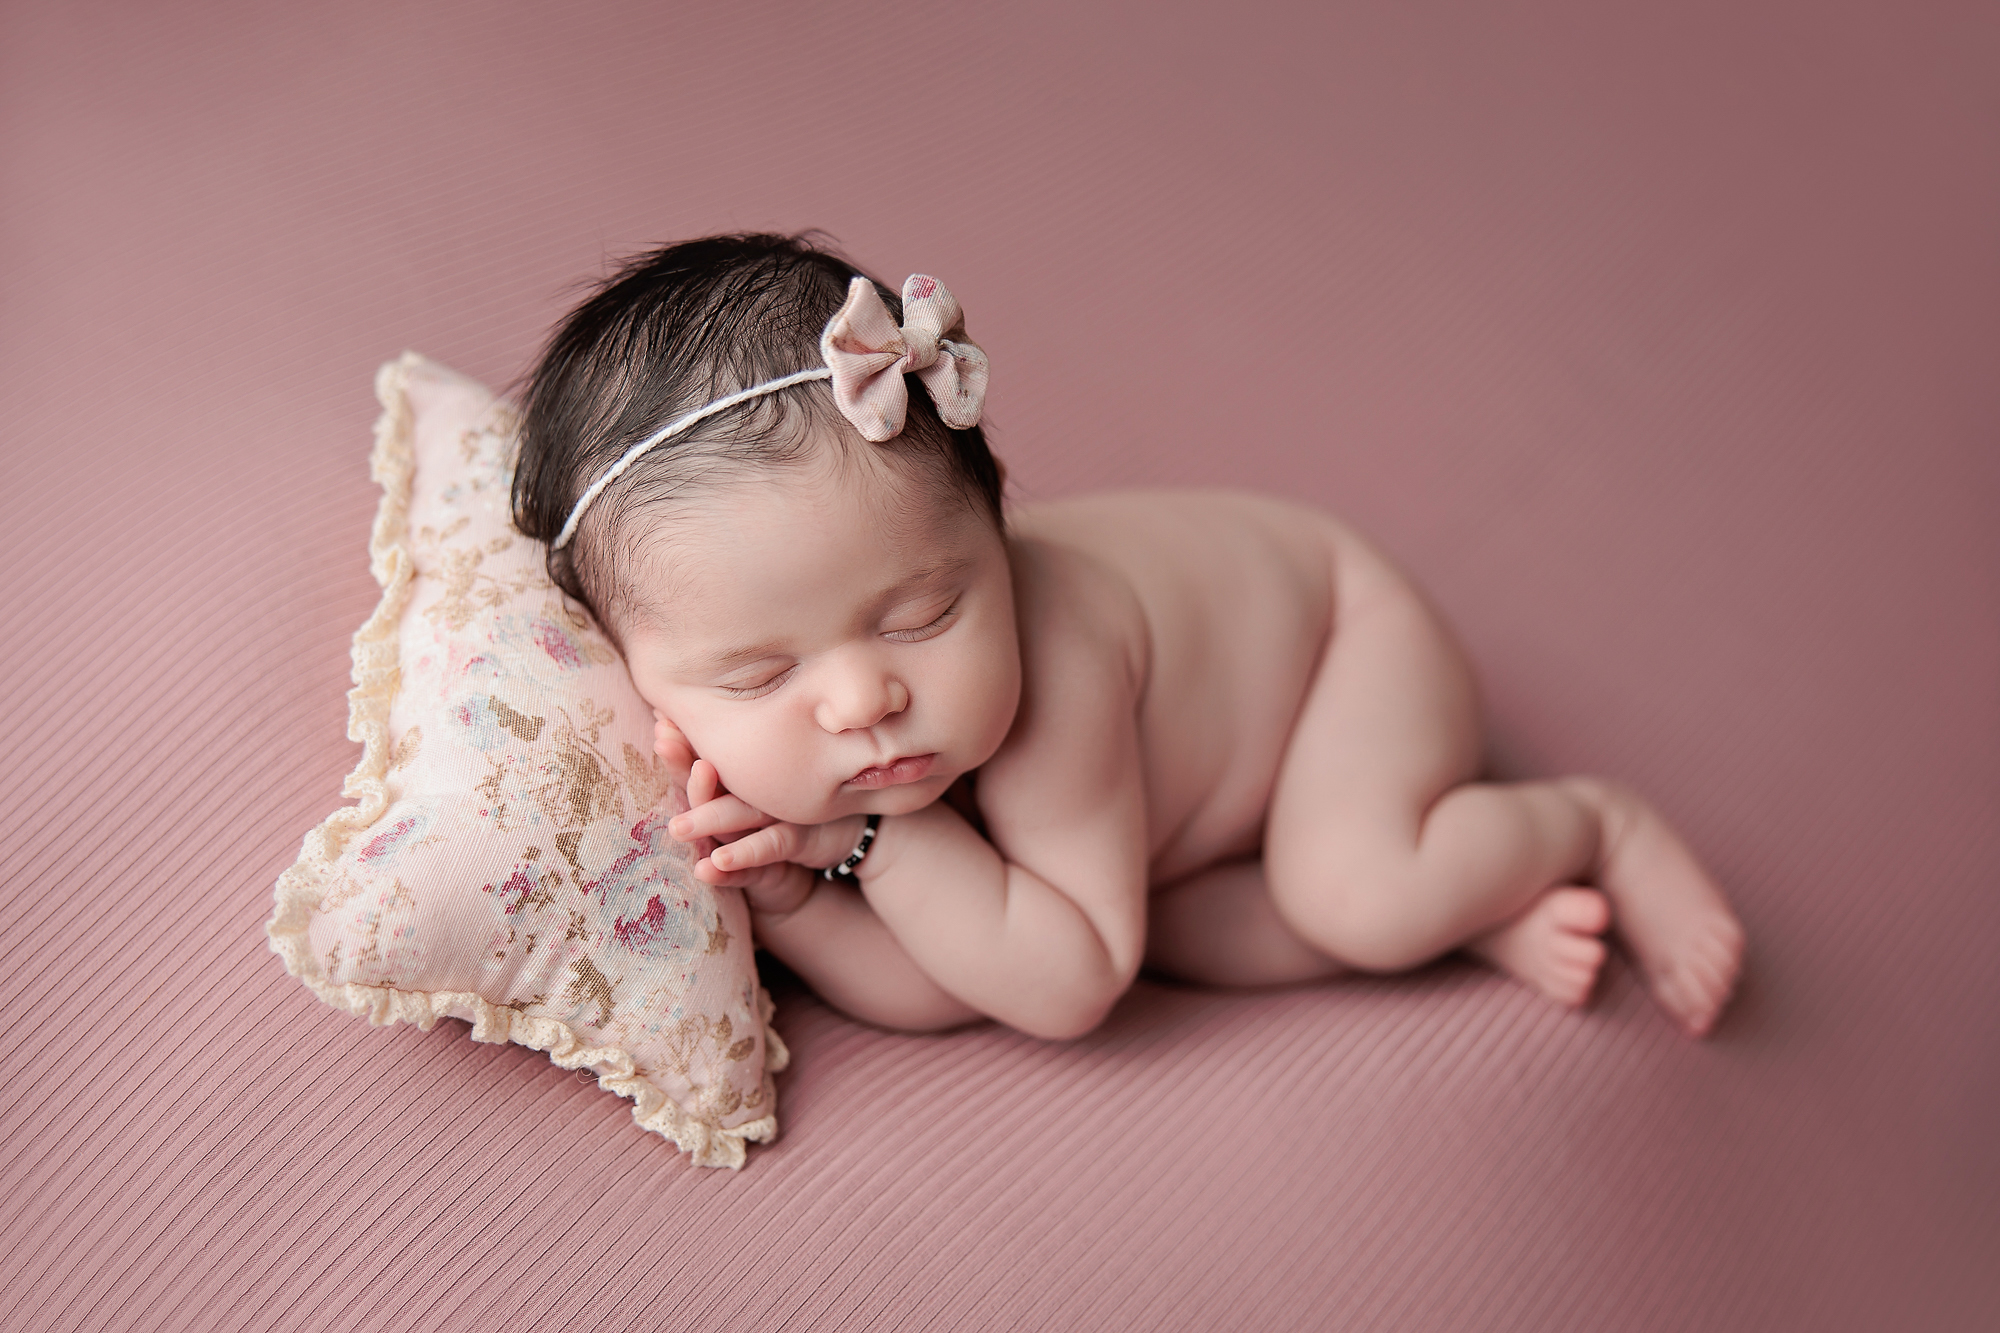 Newborn Photography Calgary by Amanda Dams - Baby with Pink Pillow